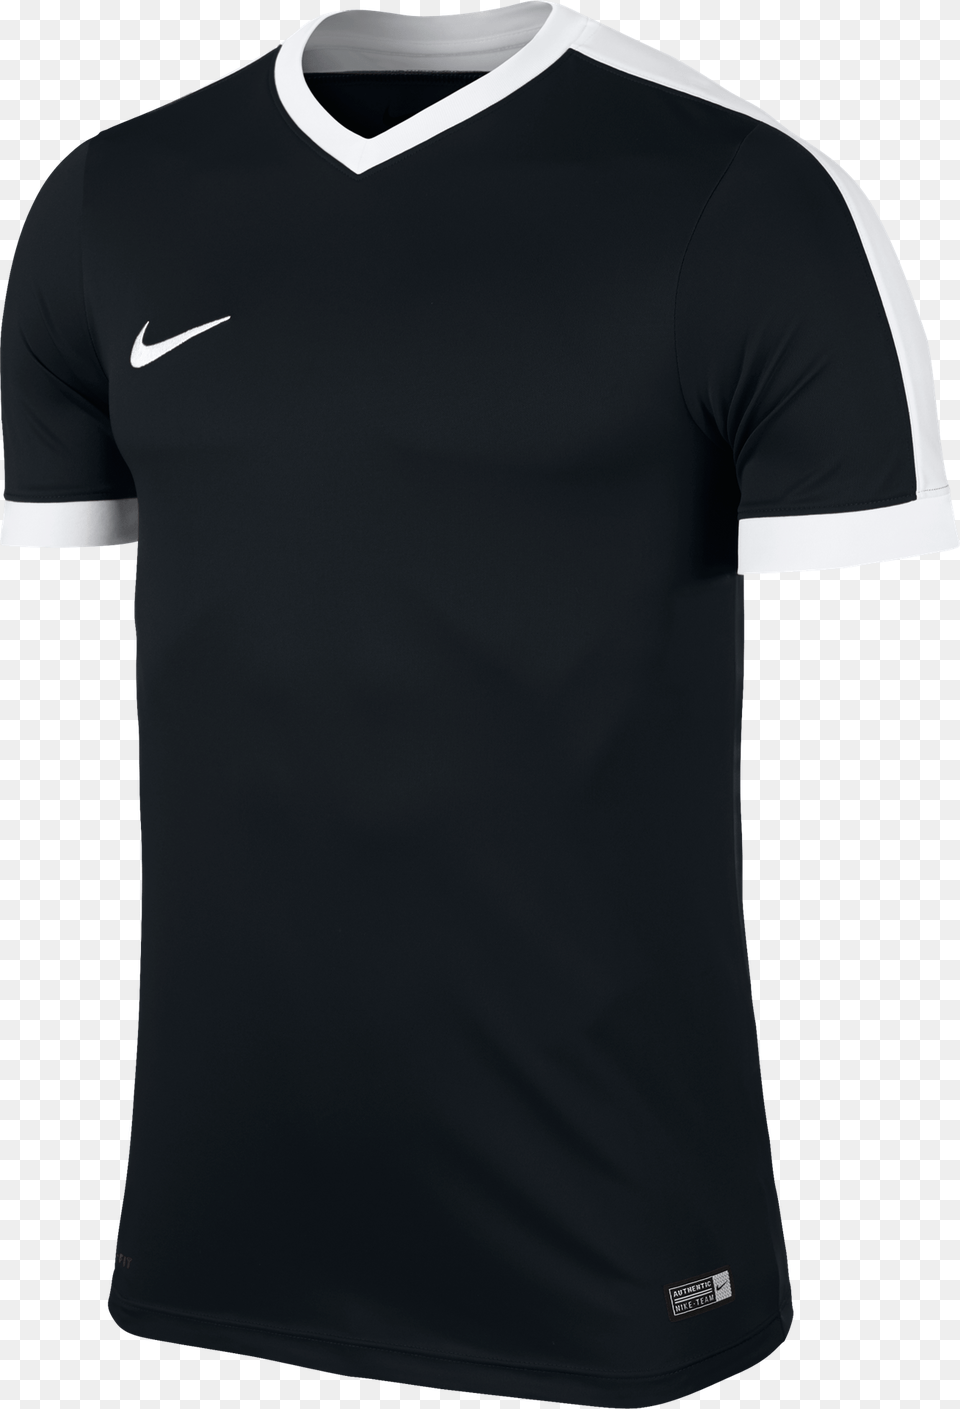 Nike Football Shirts Black, Clothing, Shirt, T-shirt, Jersey Free Png